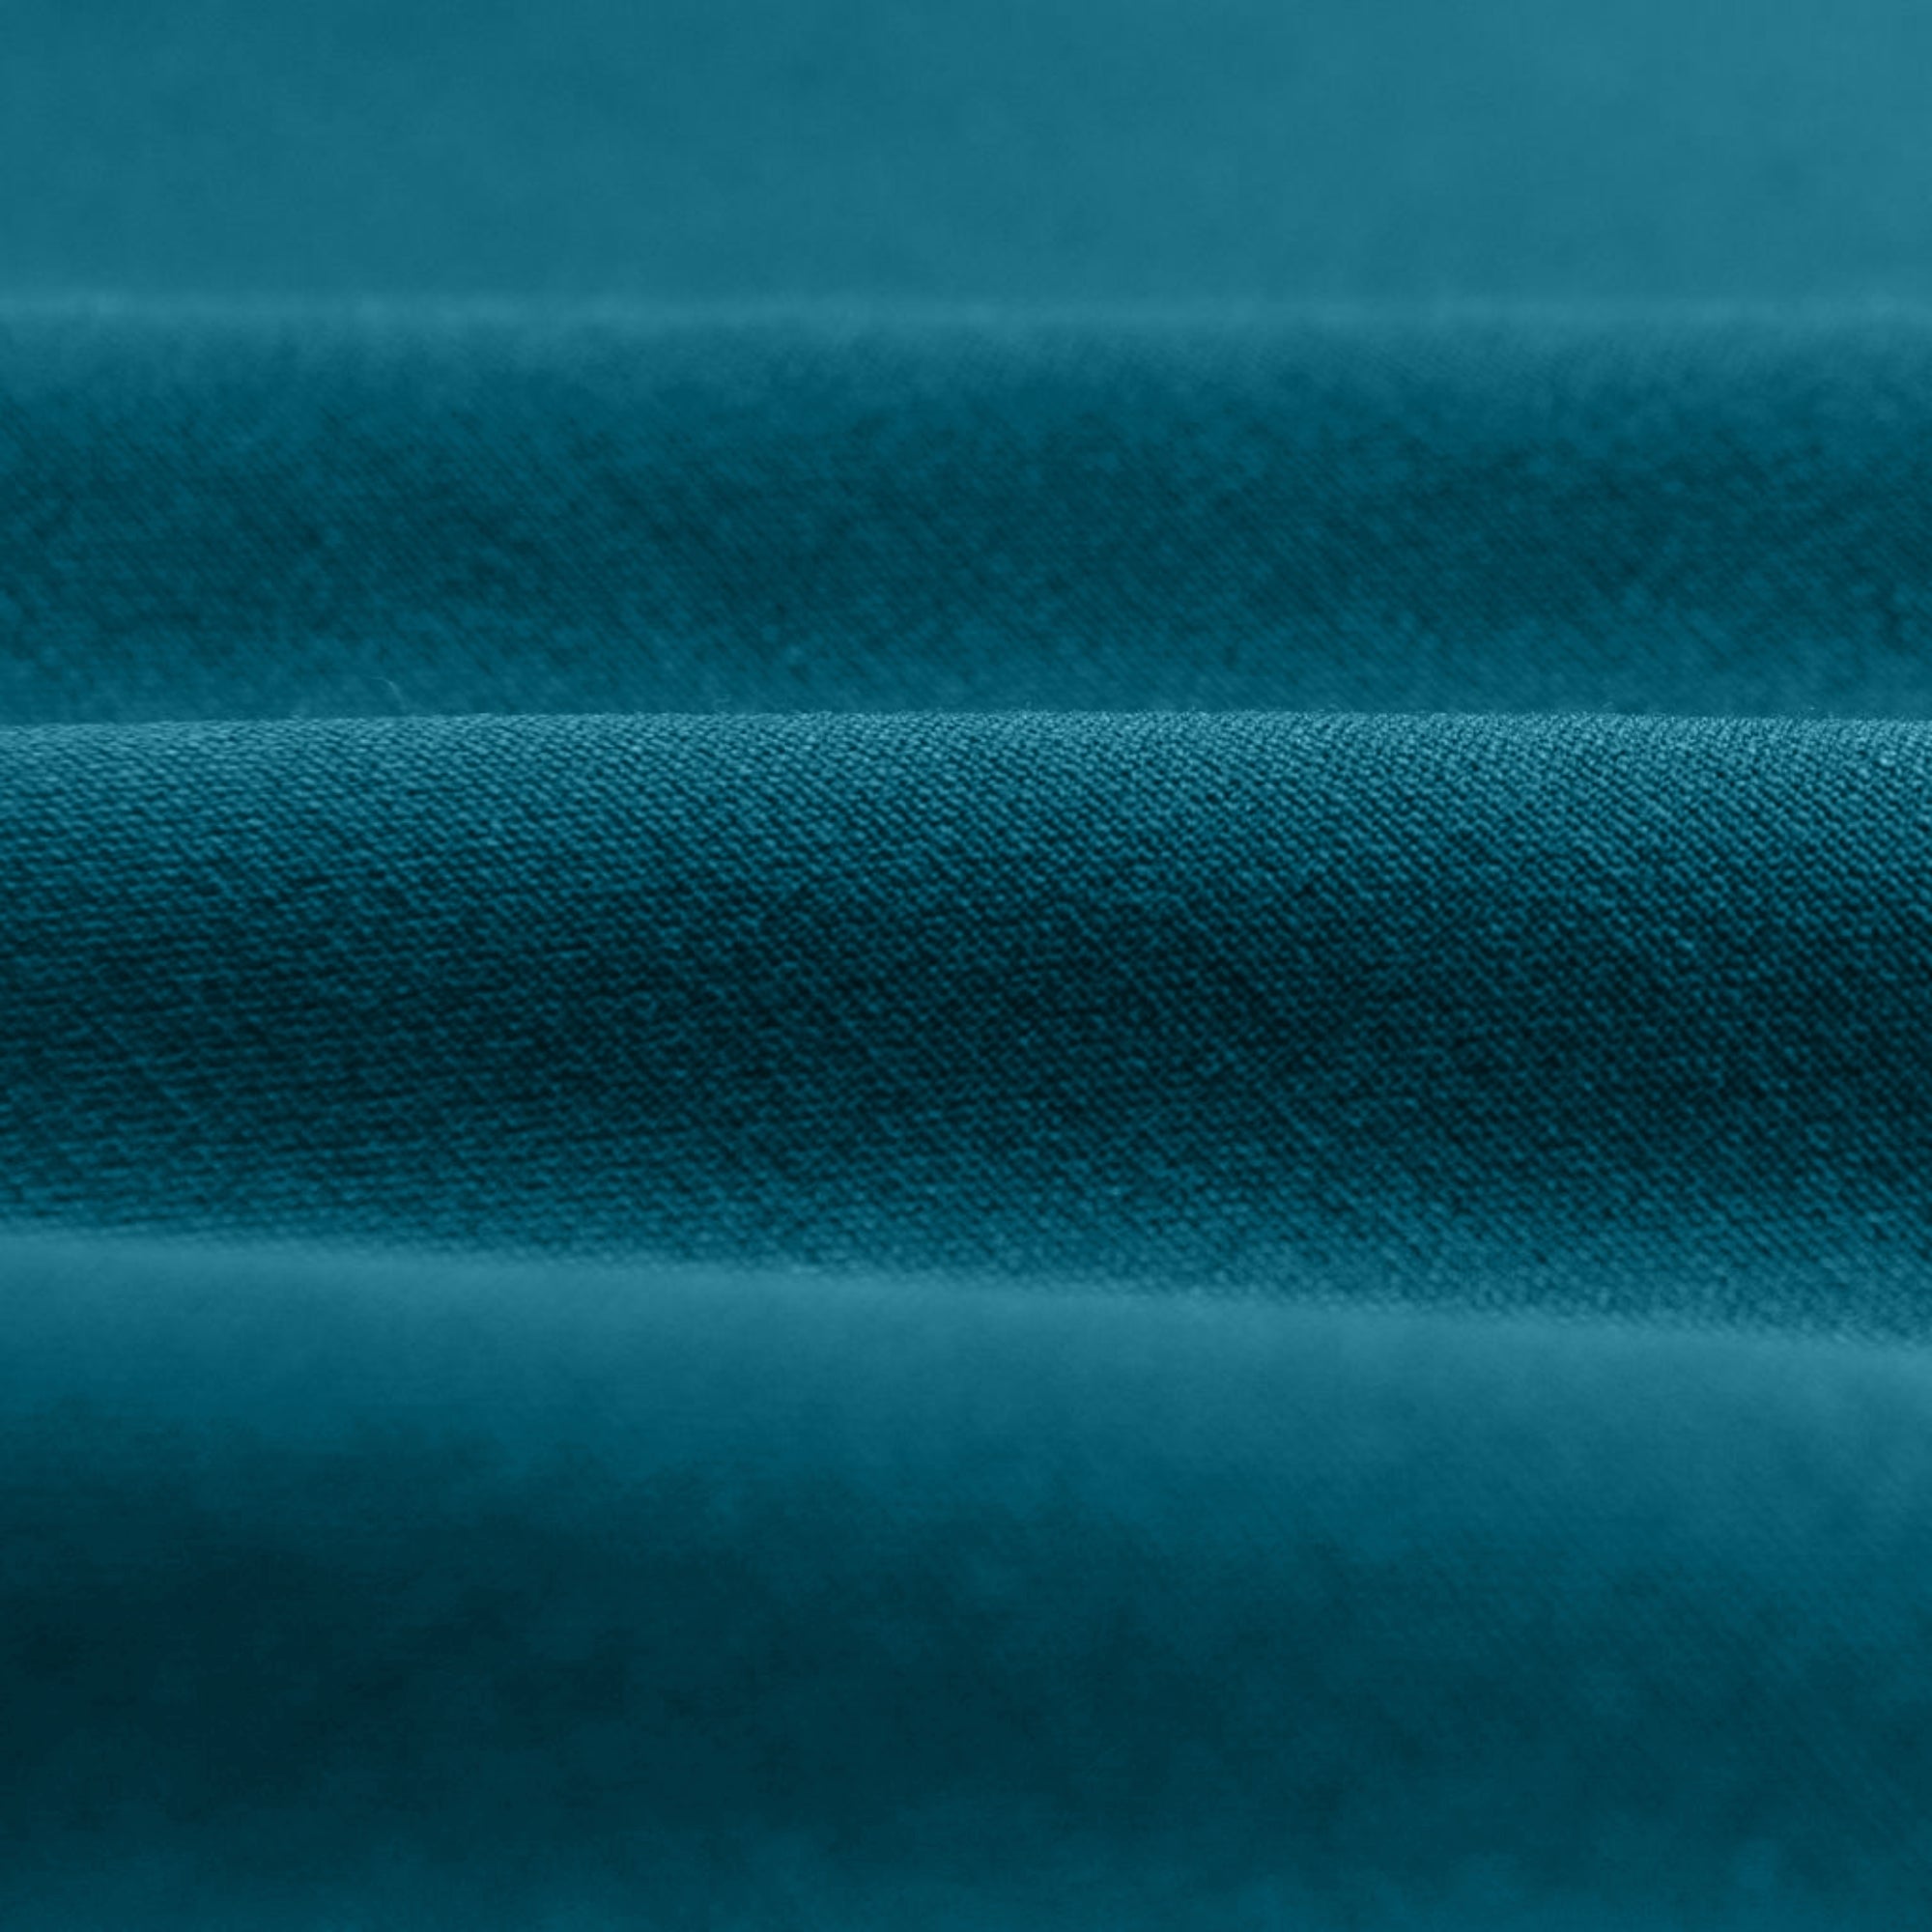 Caribbean Blue scrubs fabric close up image